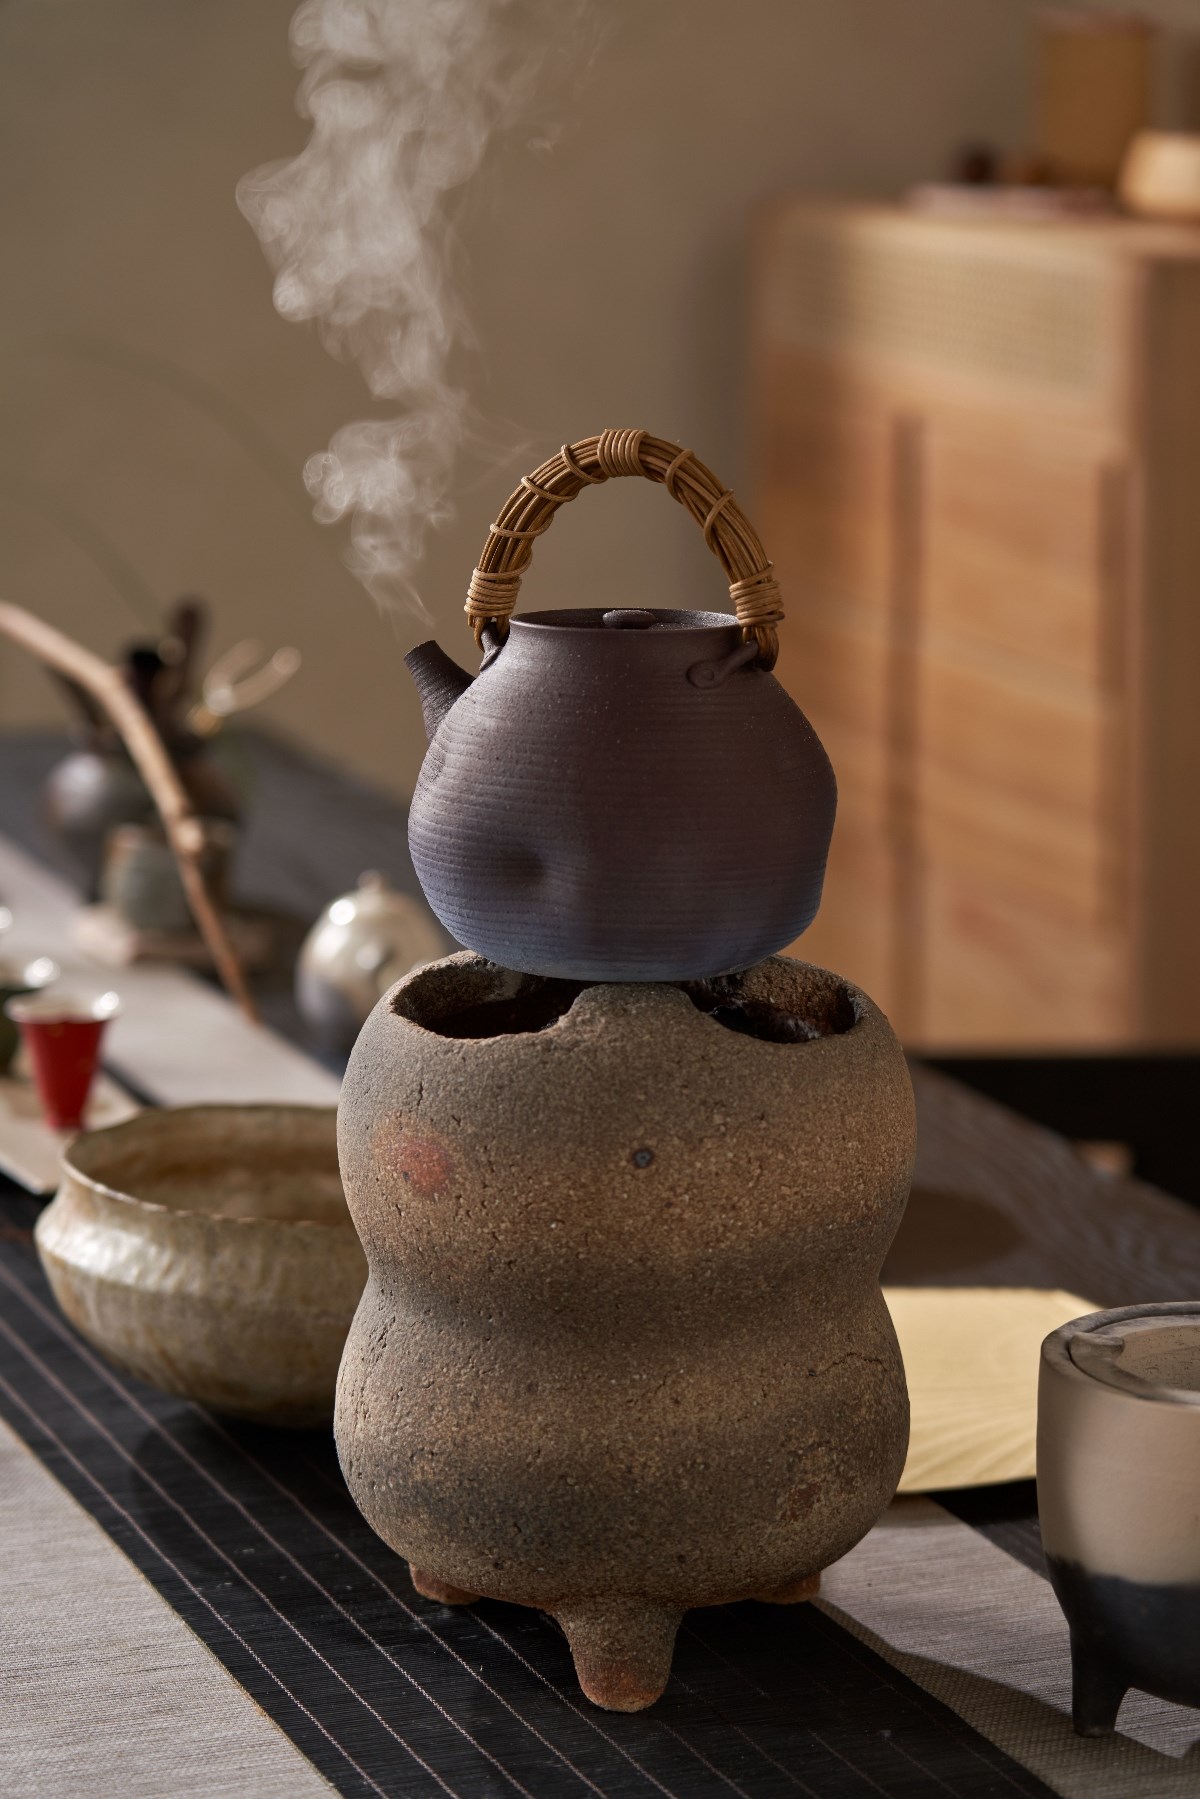 DECO 围炉煮茶 | 属于冬天的仪式感